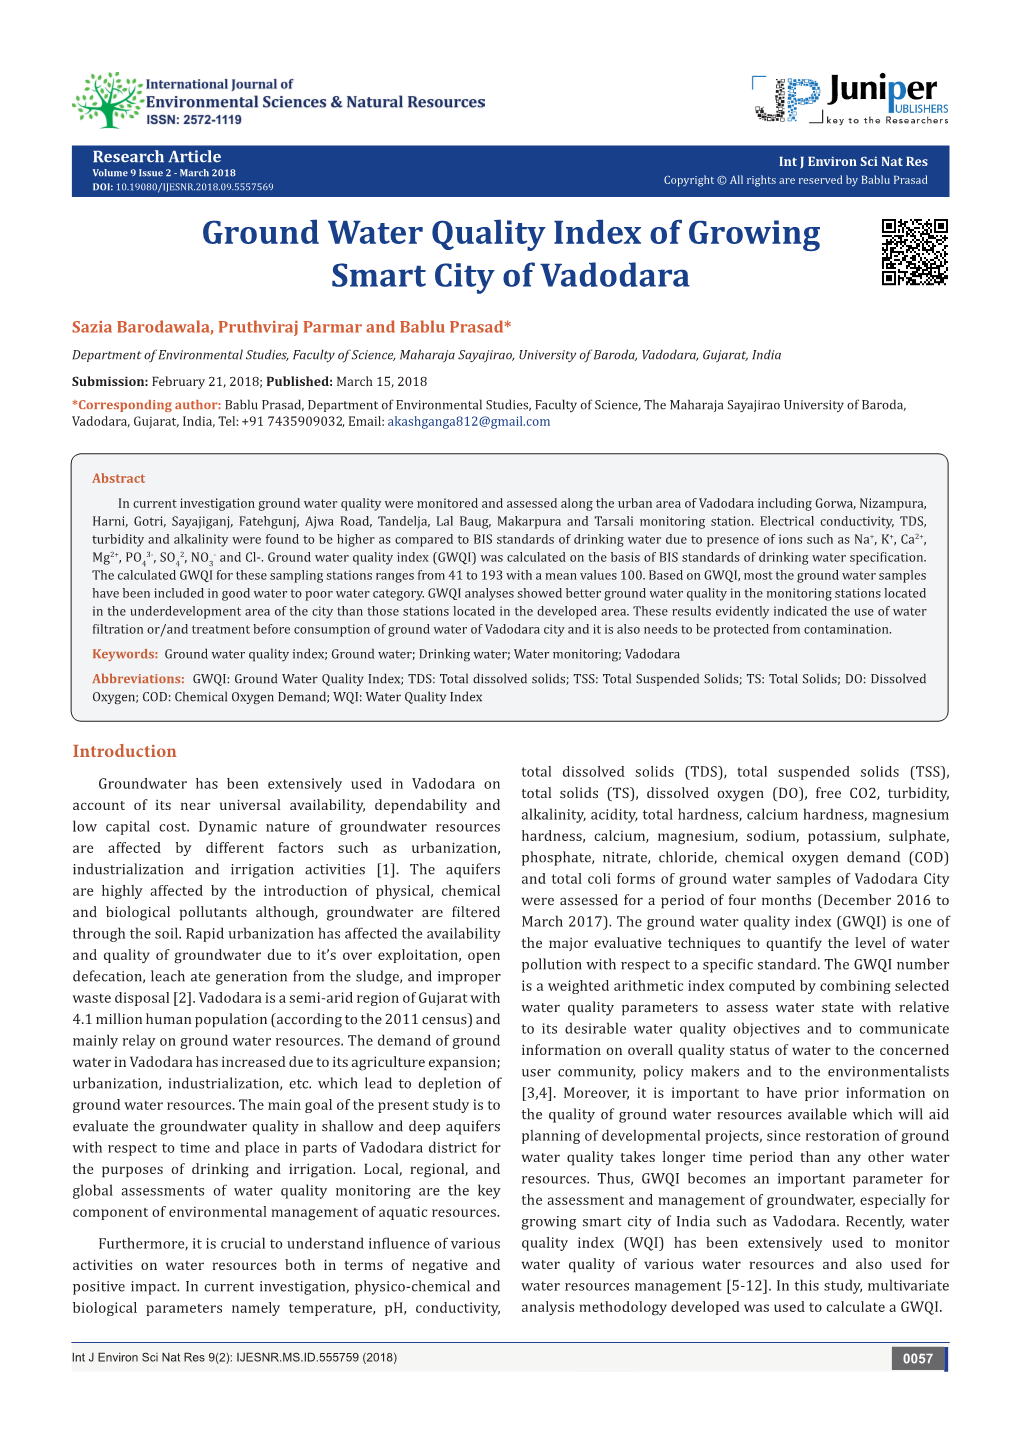 Ground Water Quality Index of Growing Smart City of Vadodara